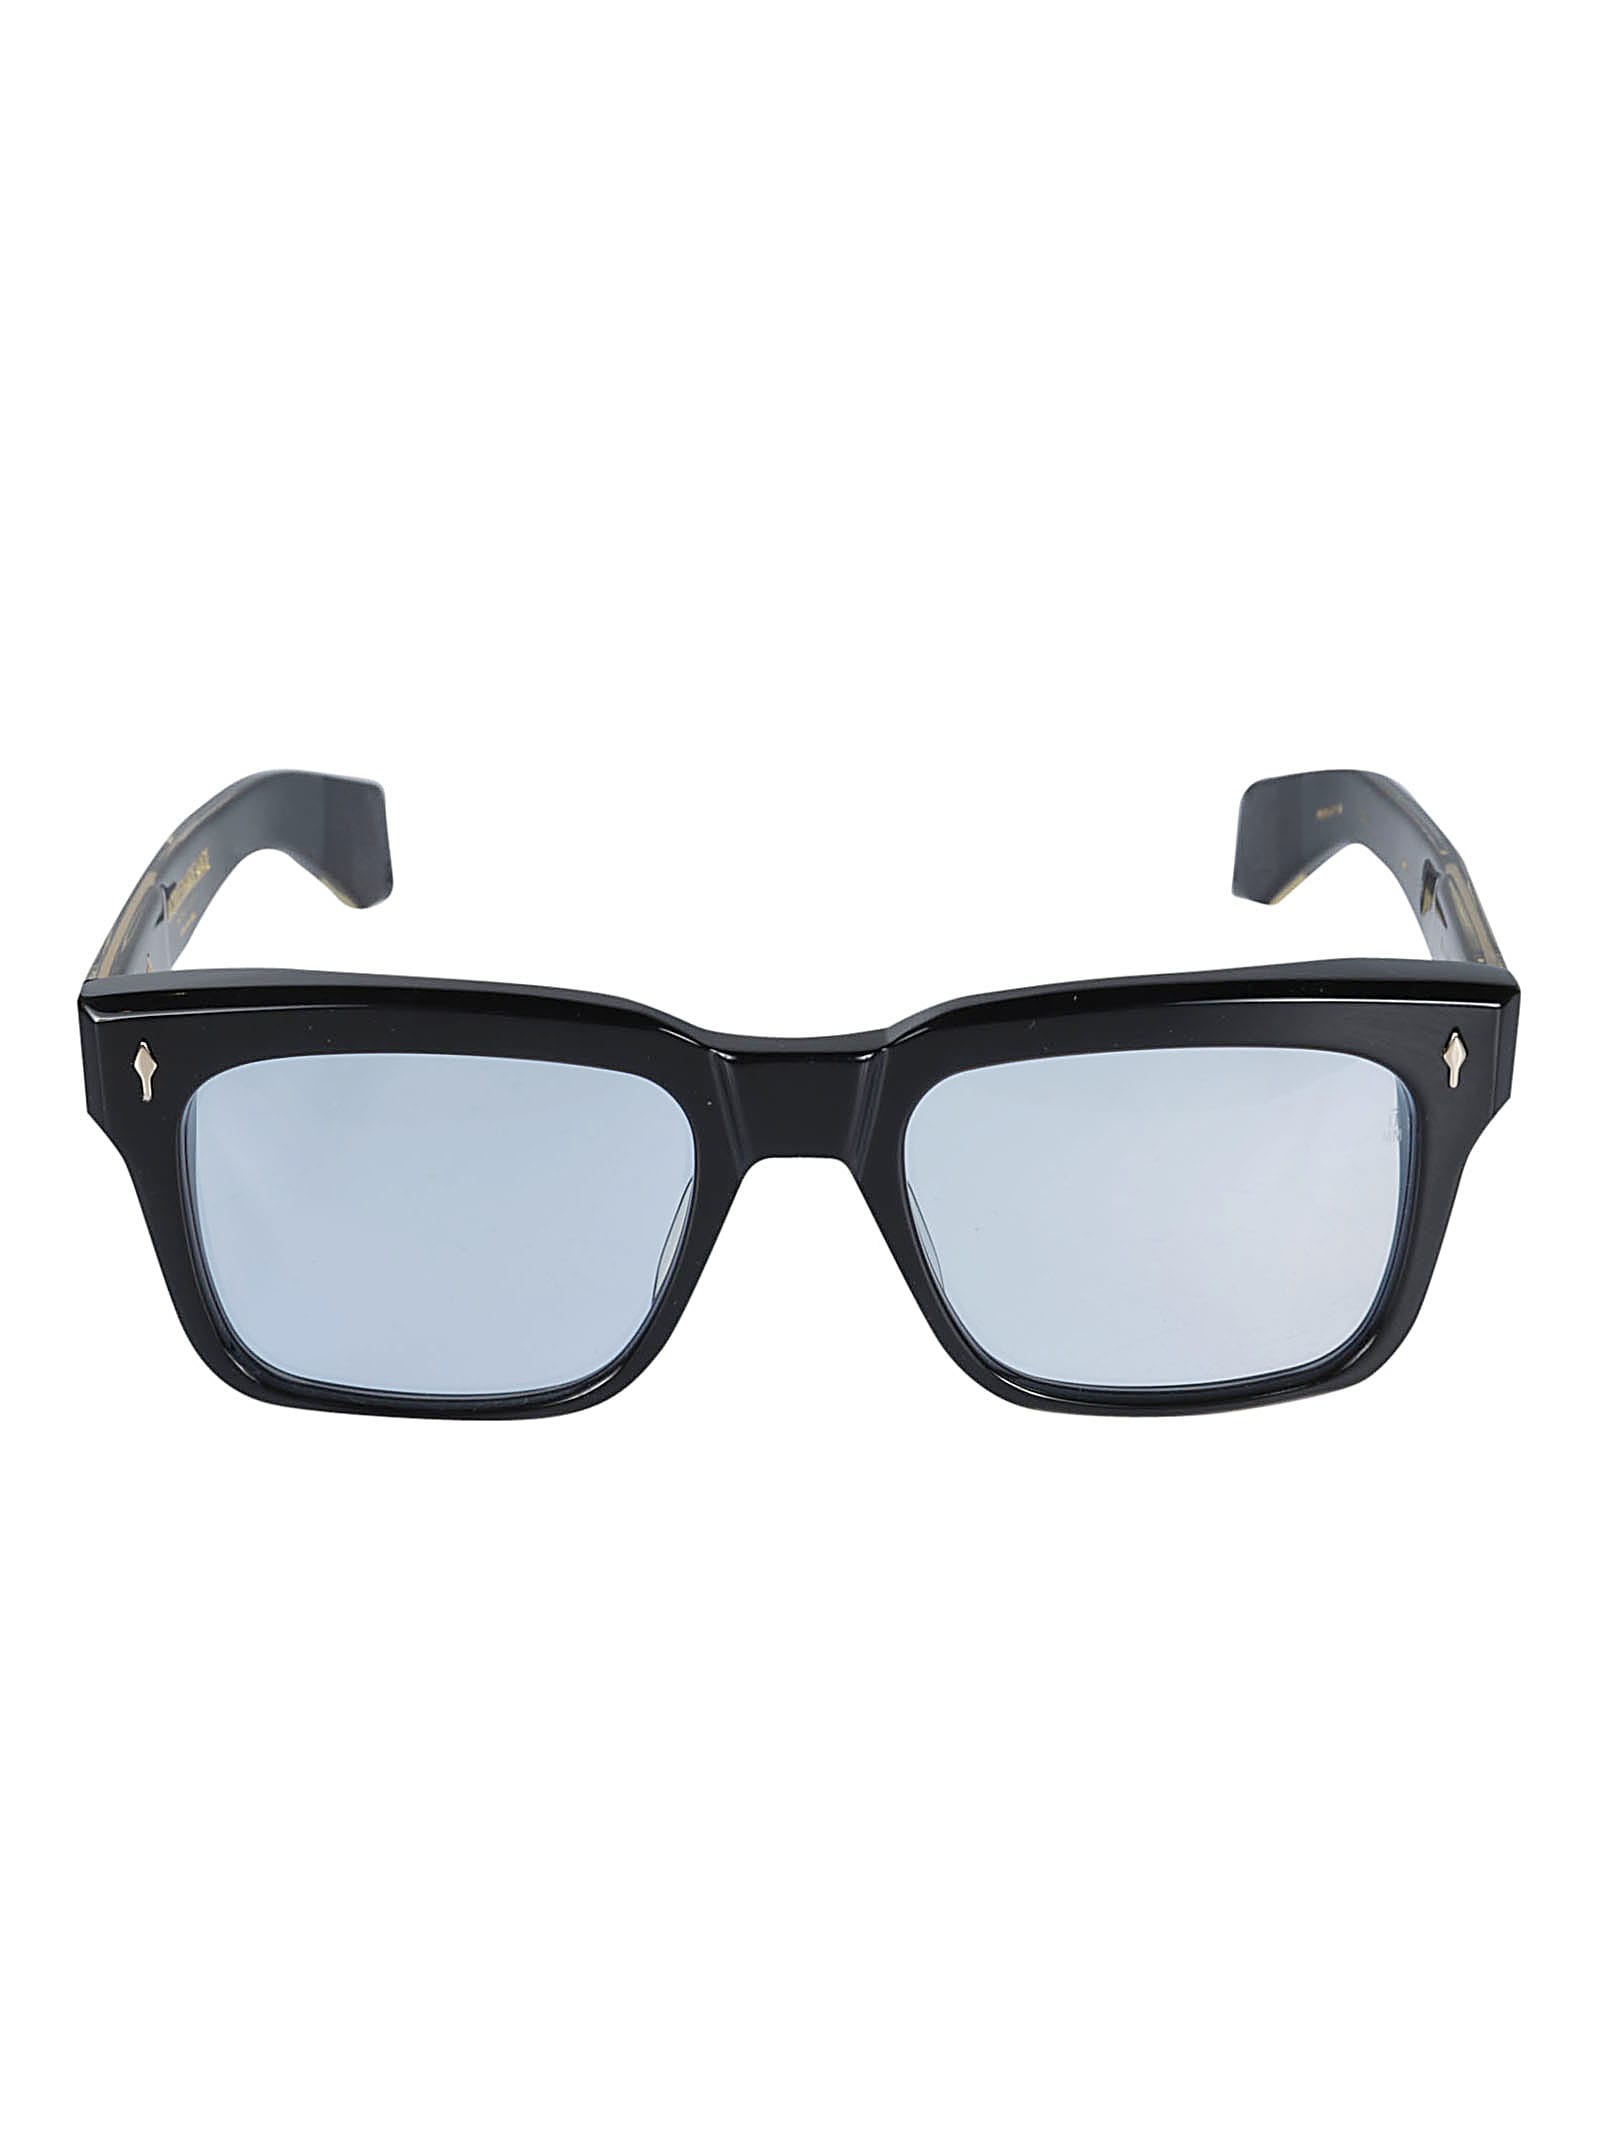 Jacques Marie Mage Wayfarer Low-tint Sunglasses